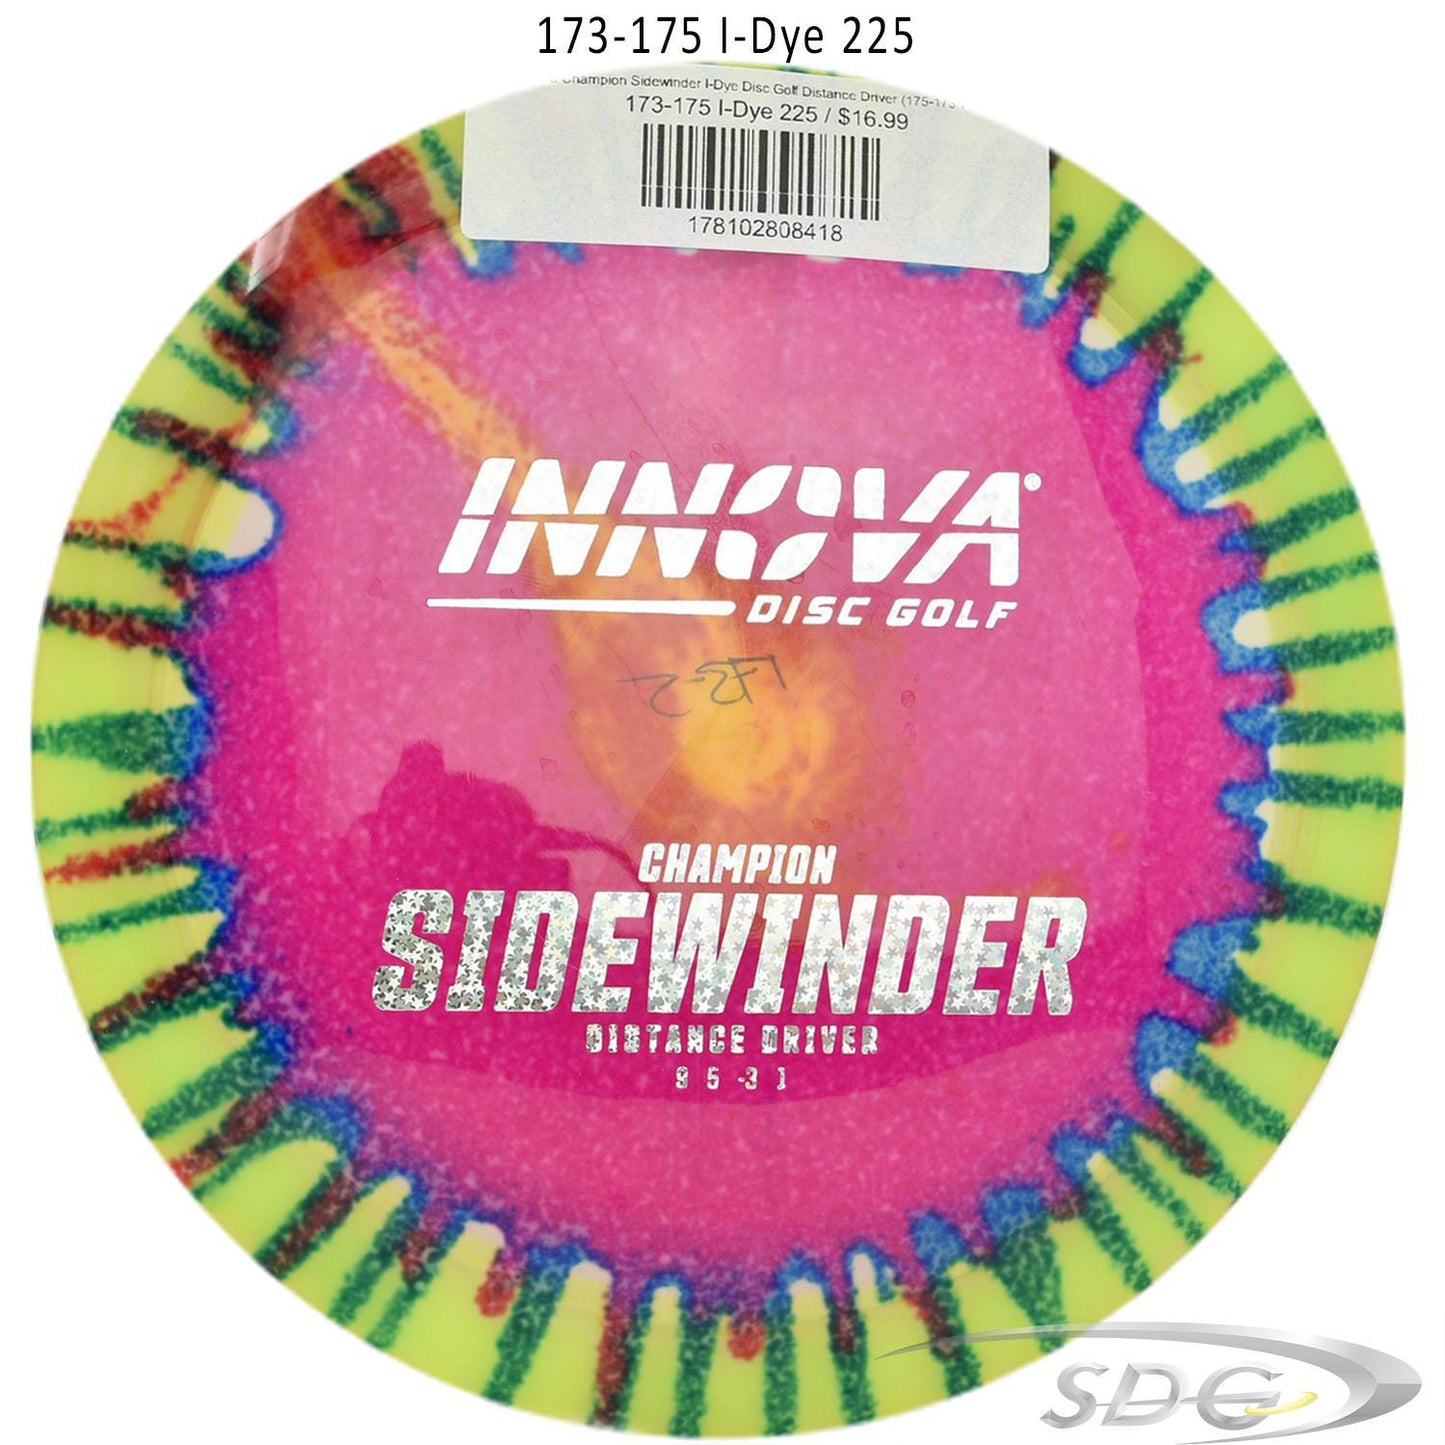 innova-champion-sidewinder-i-dye-disc-golf-distance-driver 173-175 I-Dye 225 